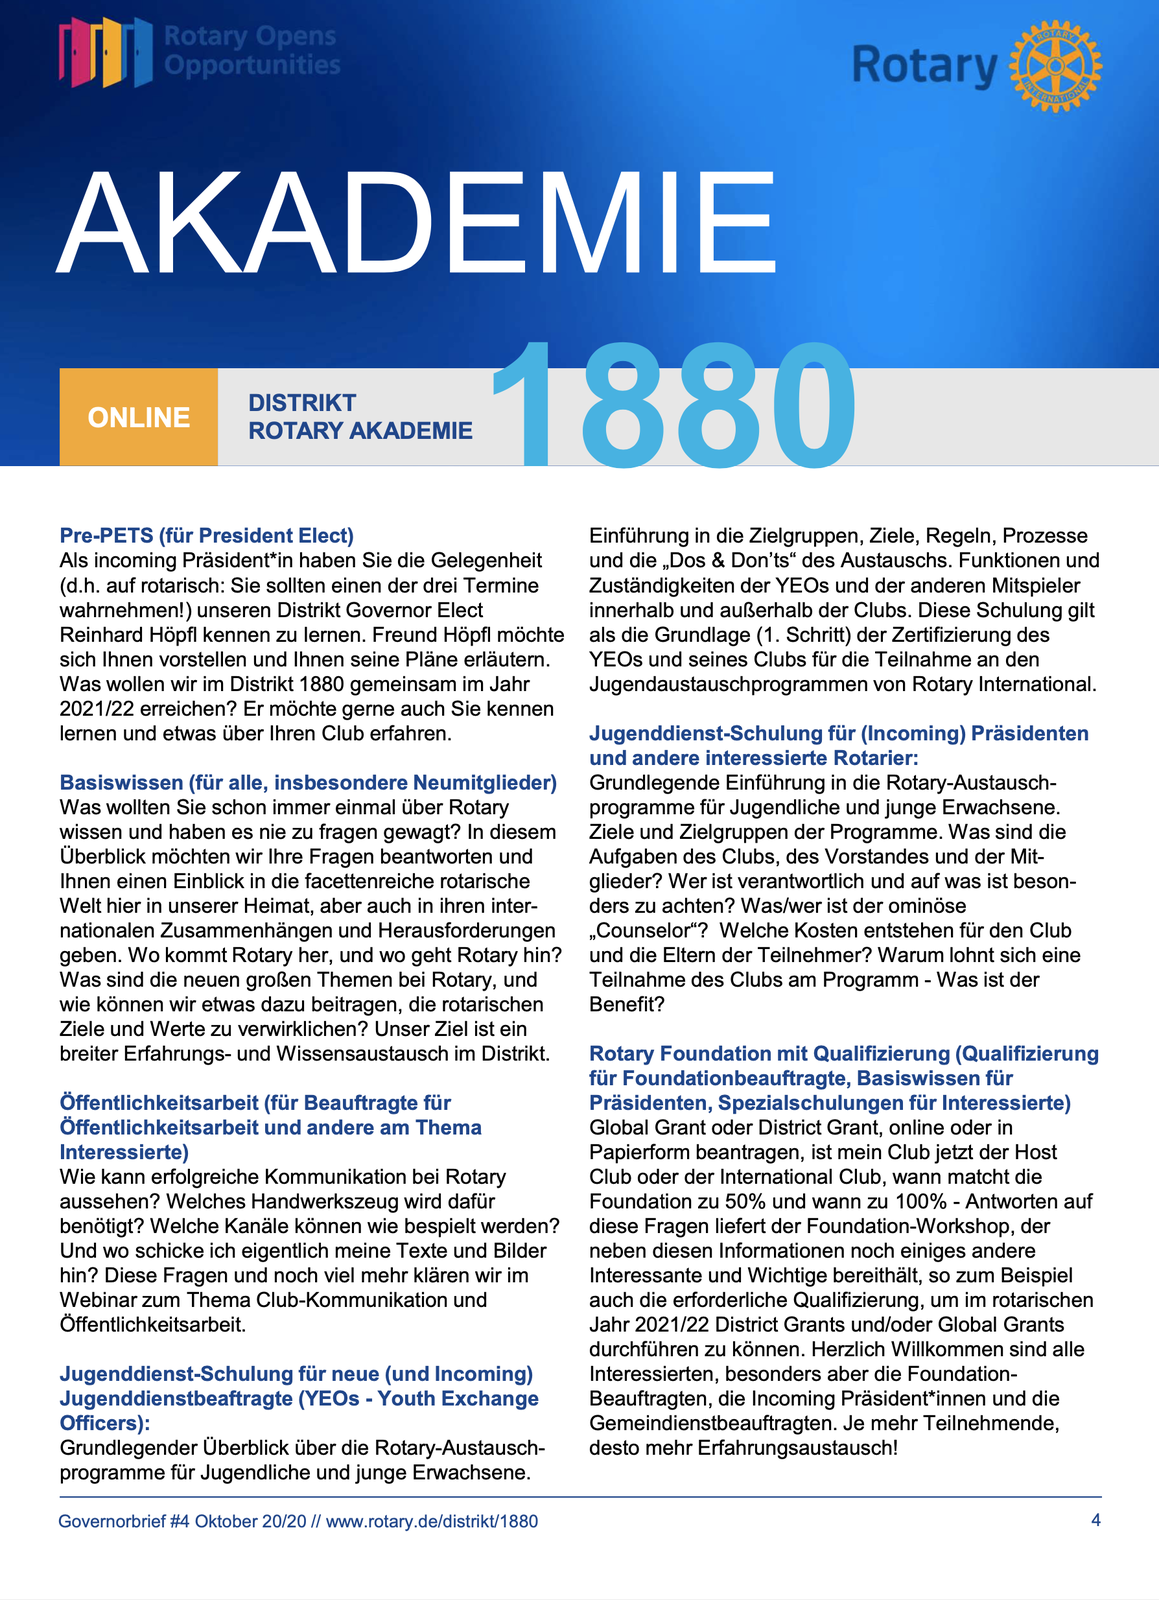 2020, akademie, d1880, akademieprogramm, programm